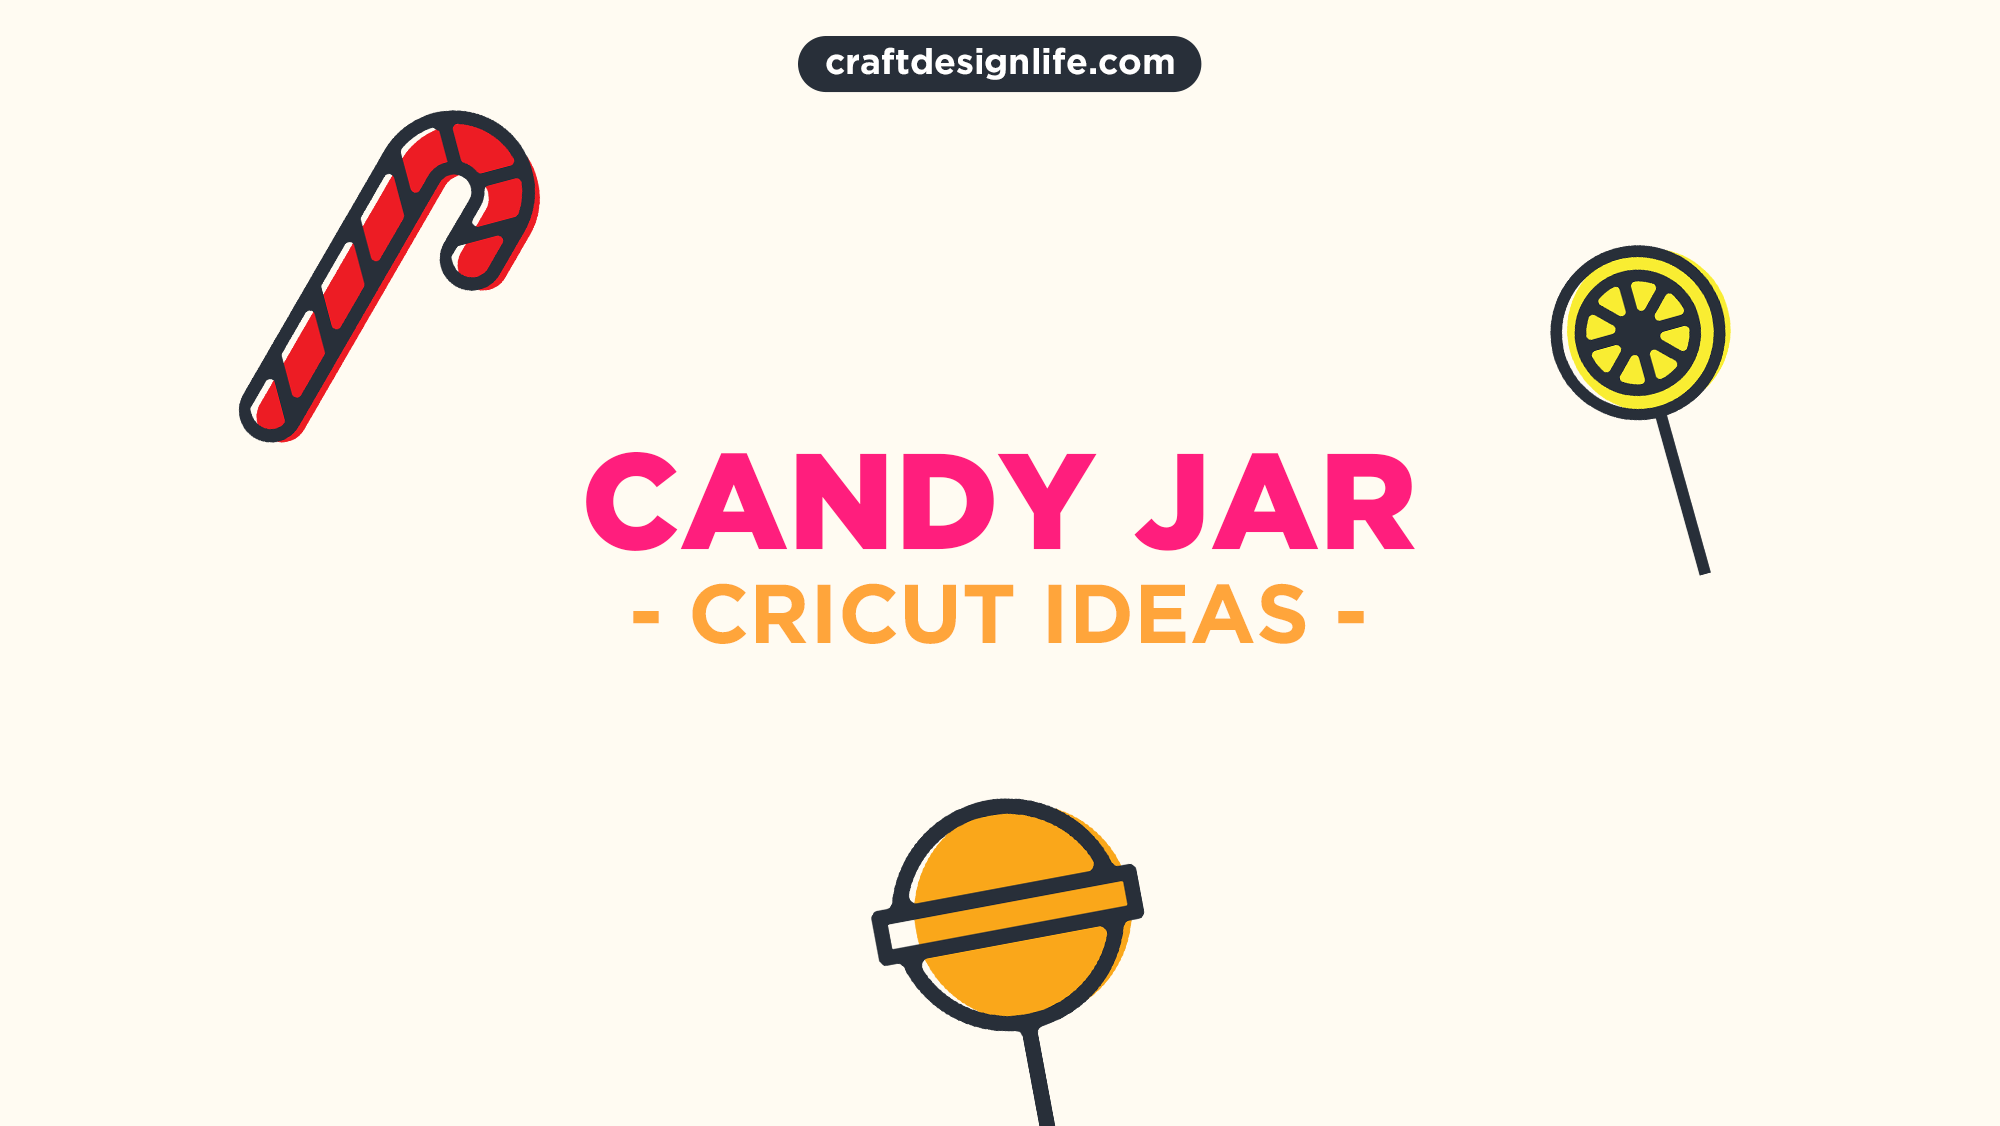 10 Cricut Candy Jar Ideas & Designs